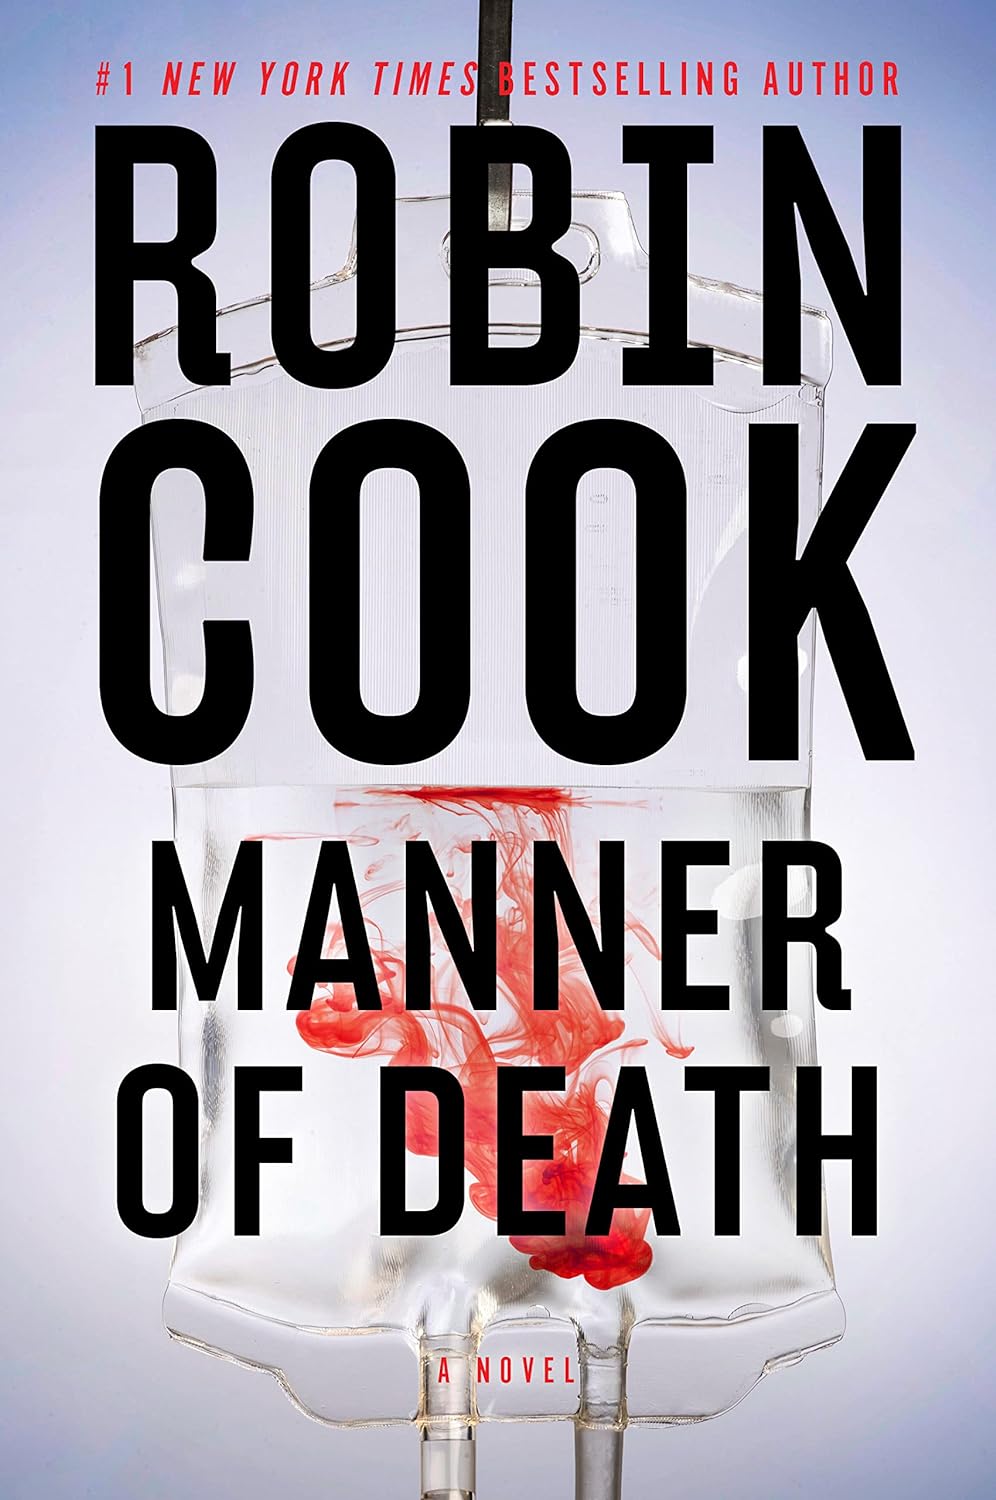 Image for "Manner of Death"